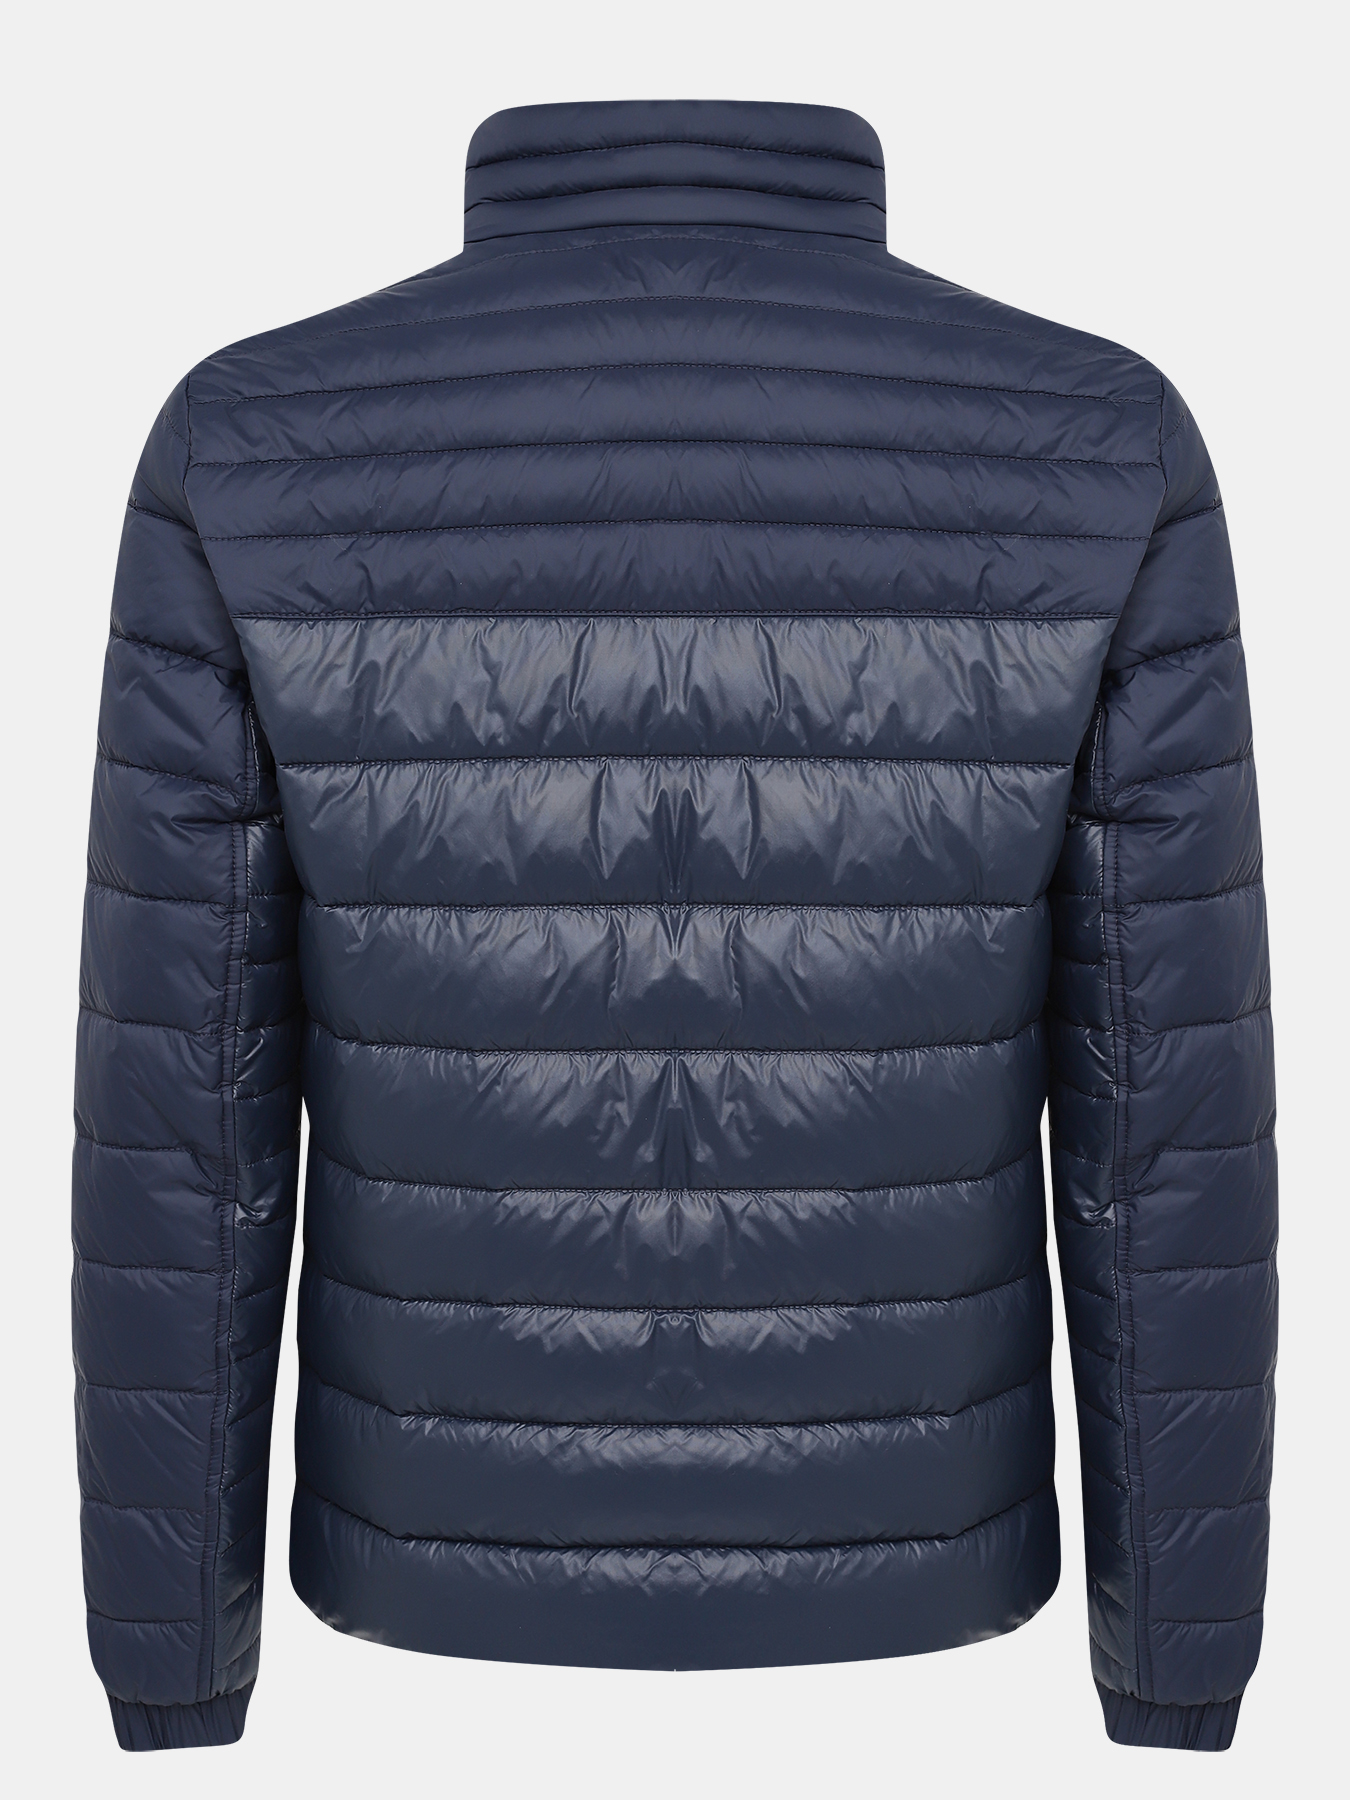 Куртка Oden big BOSS 434135-029, цвет темно-синий, размер 56 - фото 5